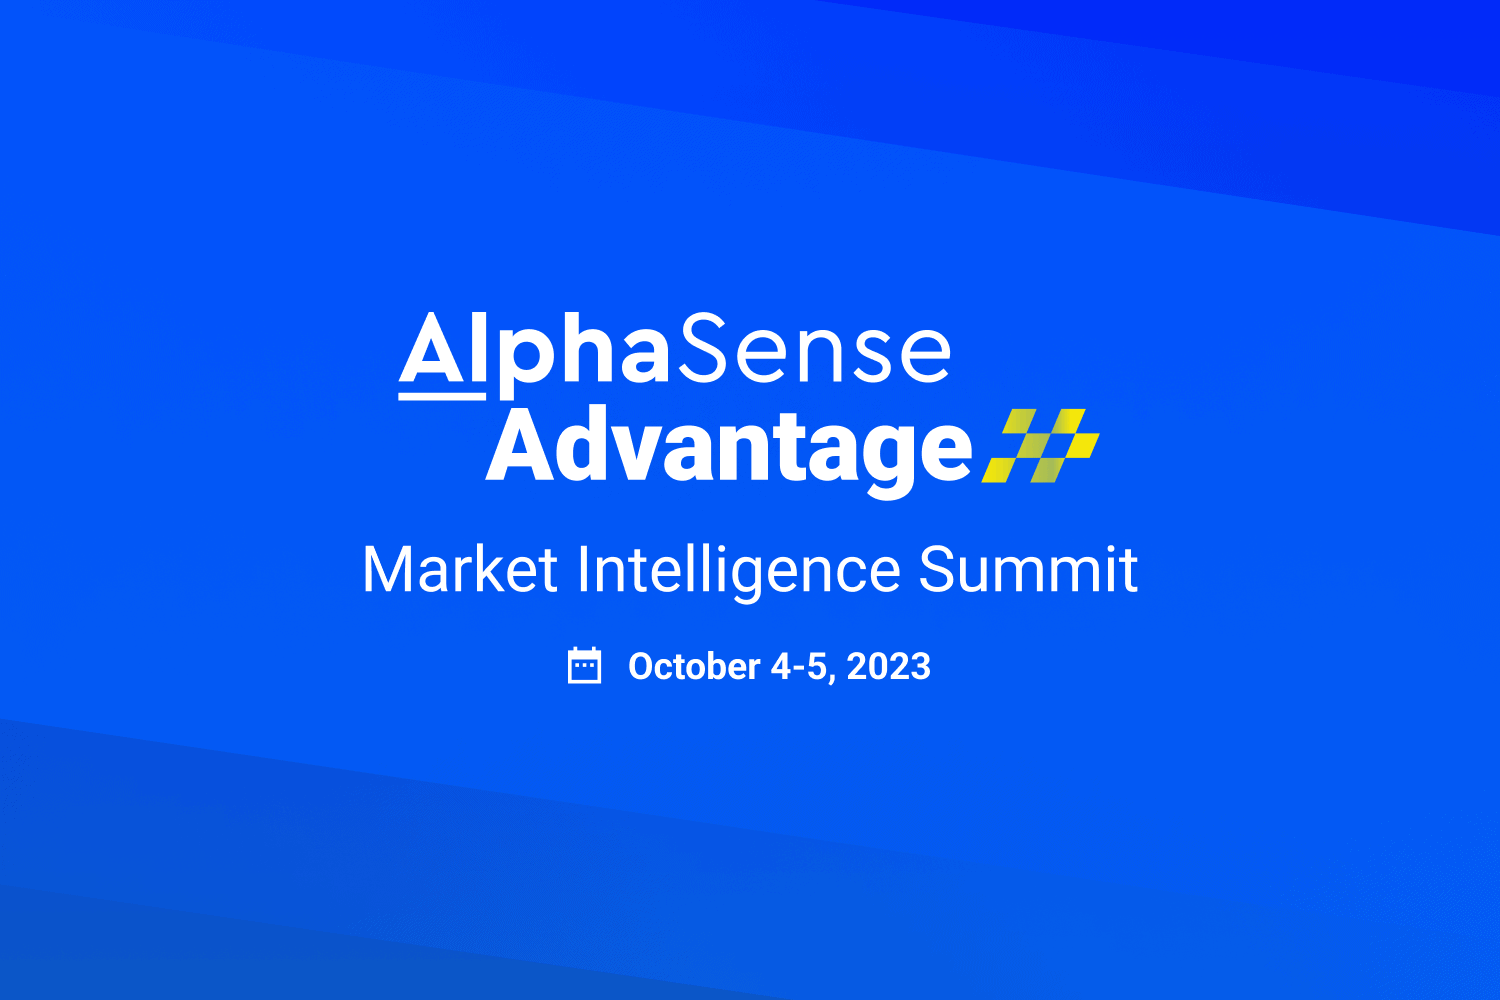 alphasense advantage summit 2023